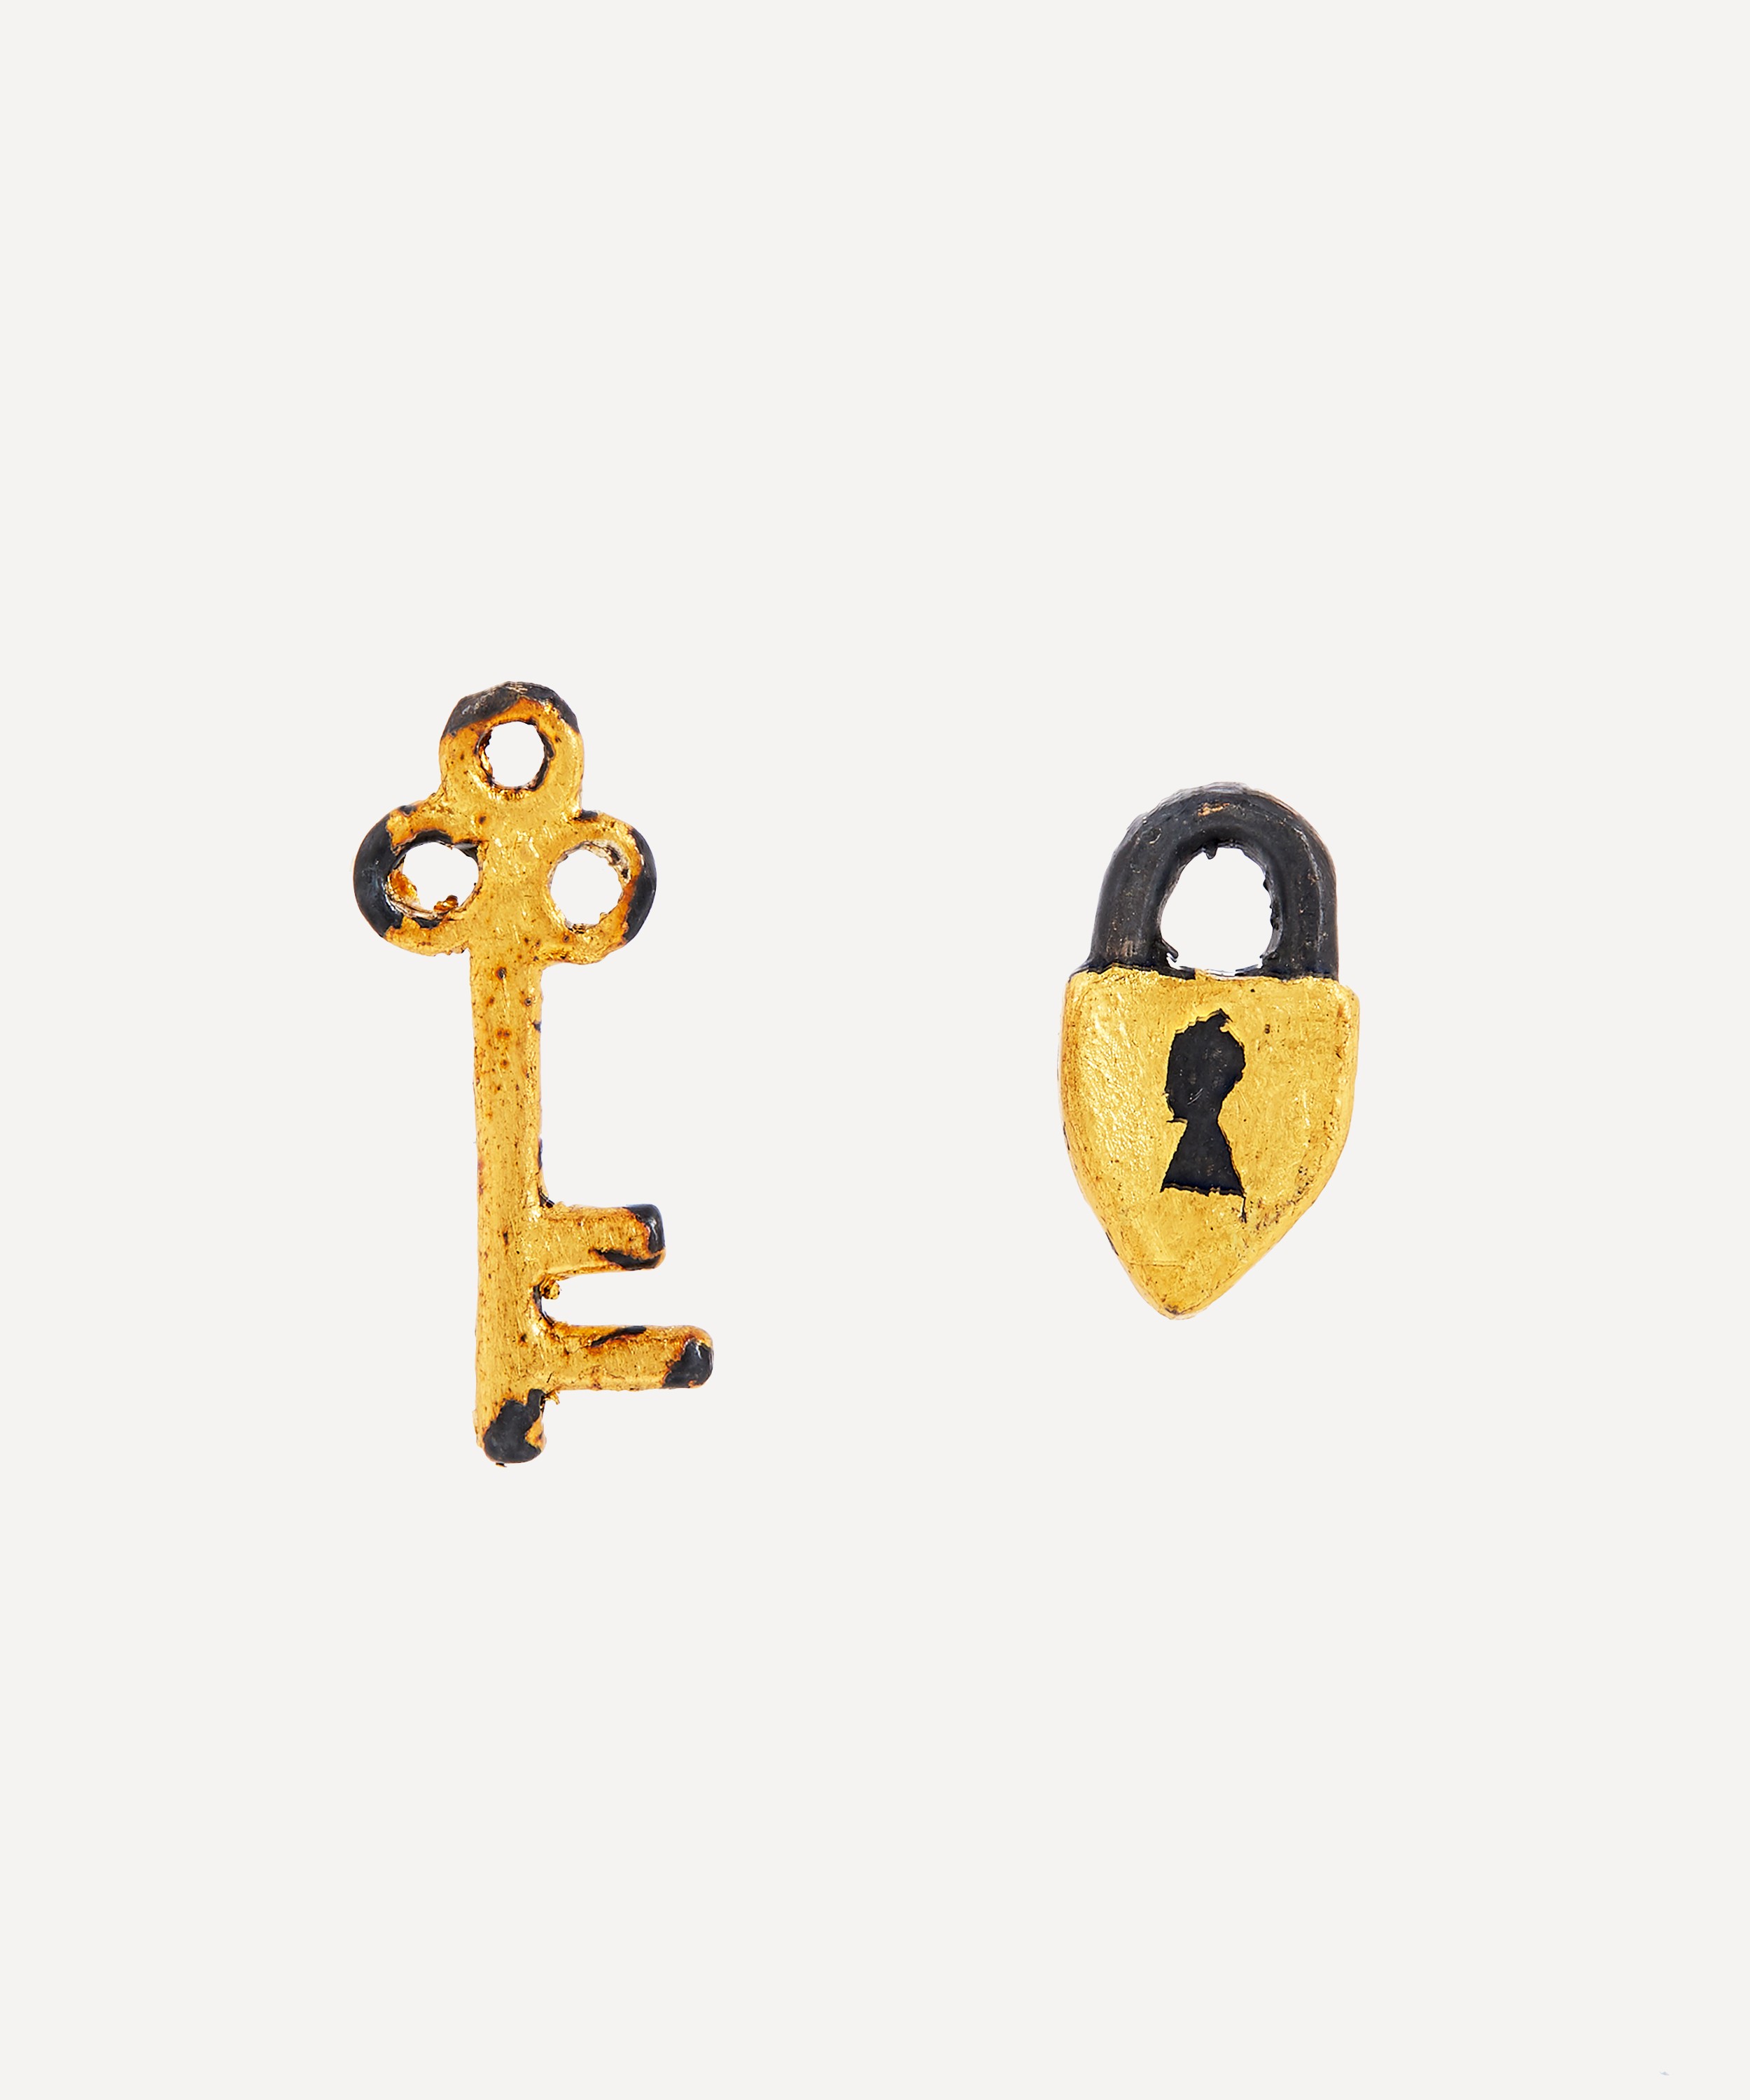 Silver Lock and Key Stud Earrings